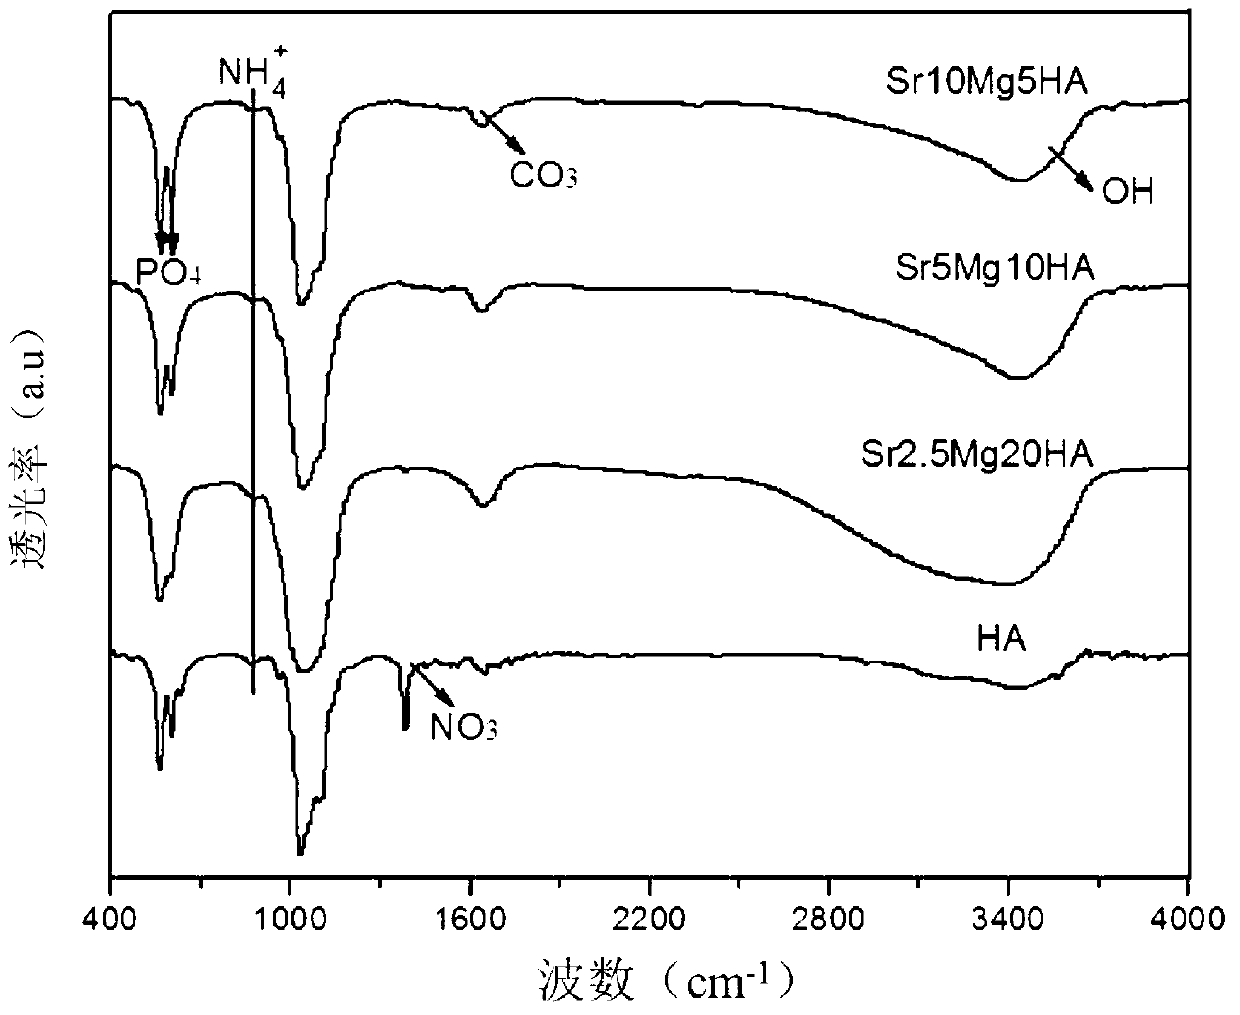 Strontium magnesium-doped nano-hydroxyapatite and preparation method thereof